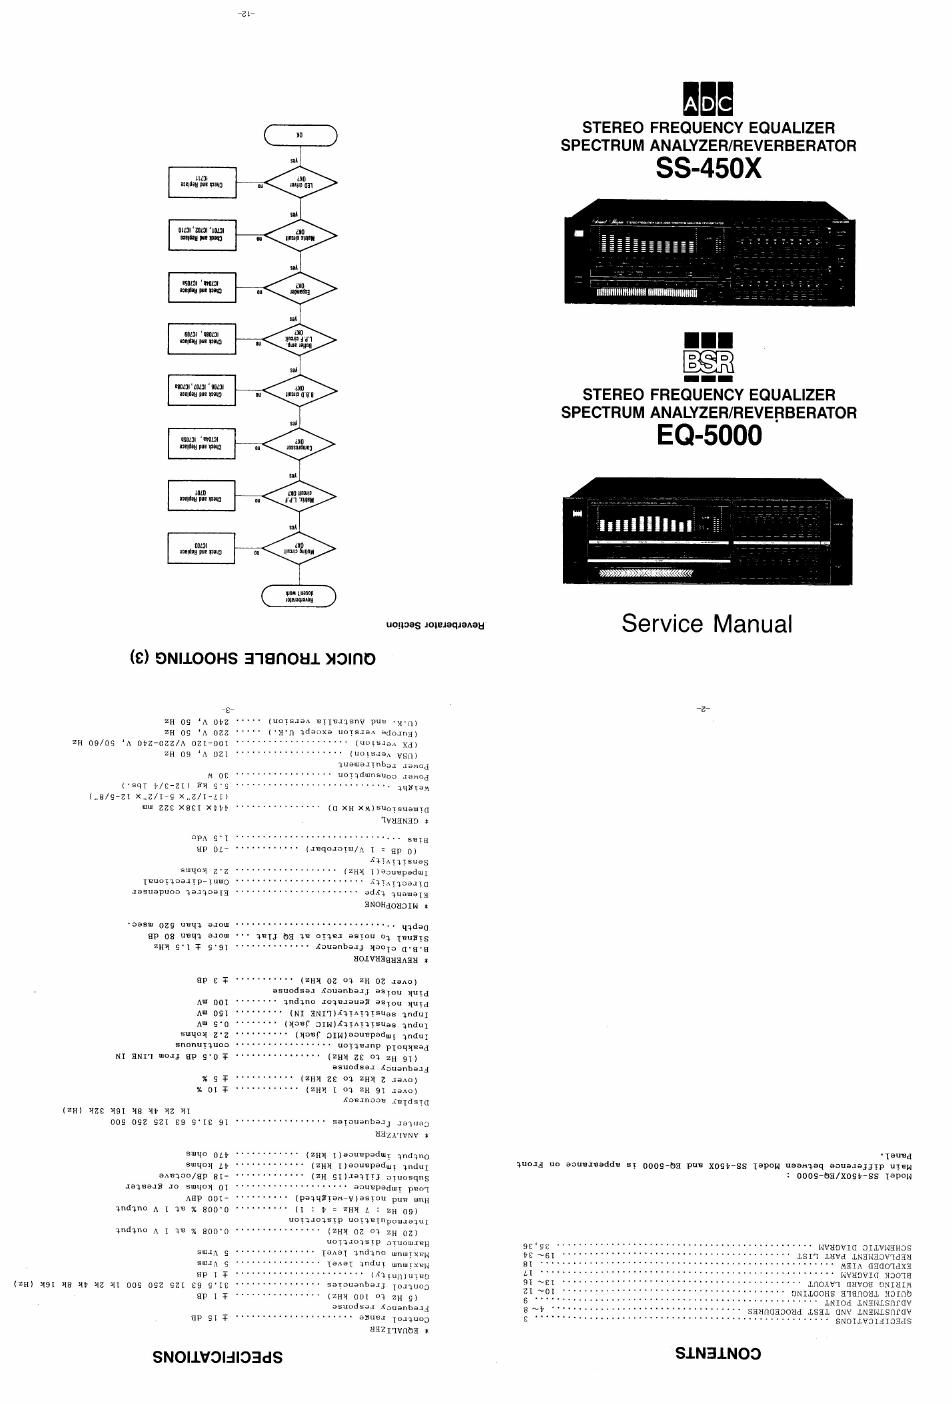 ADC SS 450X BSR EQ 5000 Service Manuals